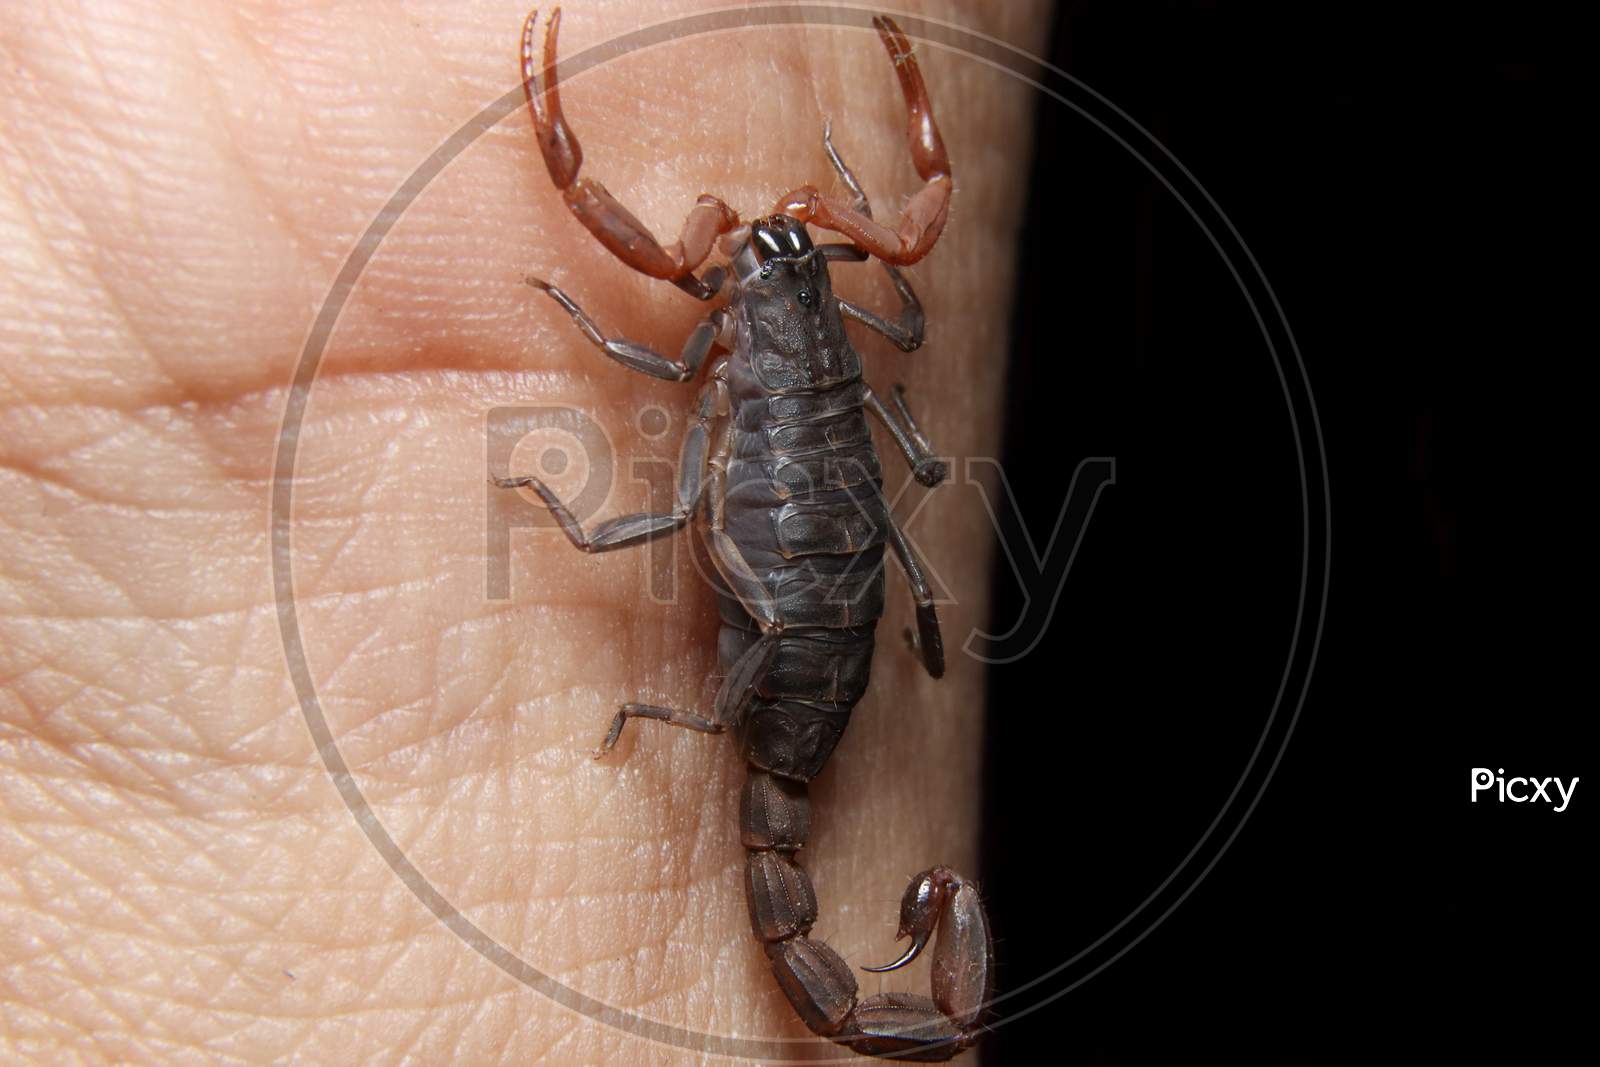 Scorpion (Lychas Tricarinatus) On Hand